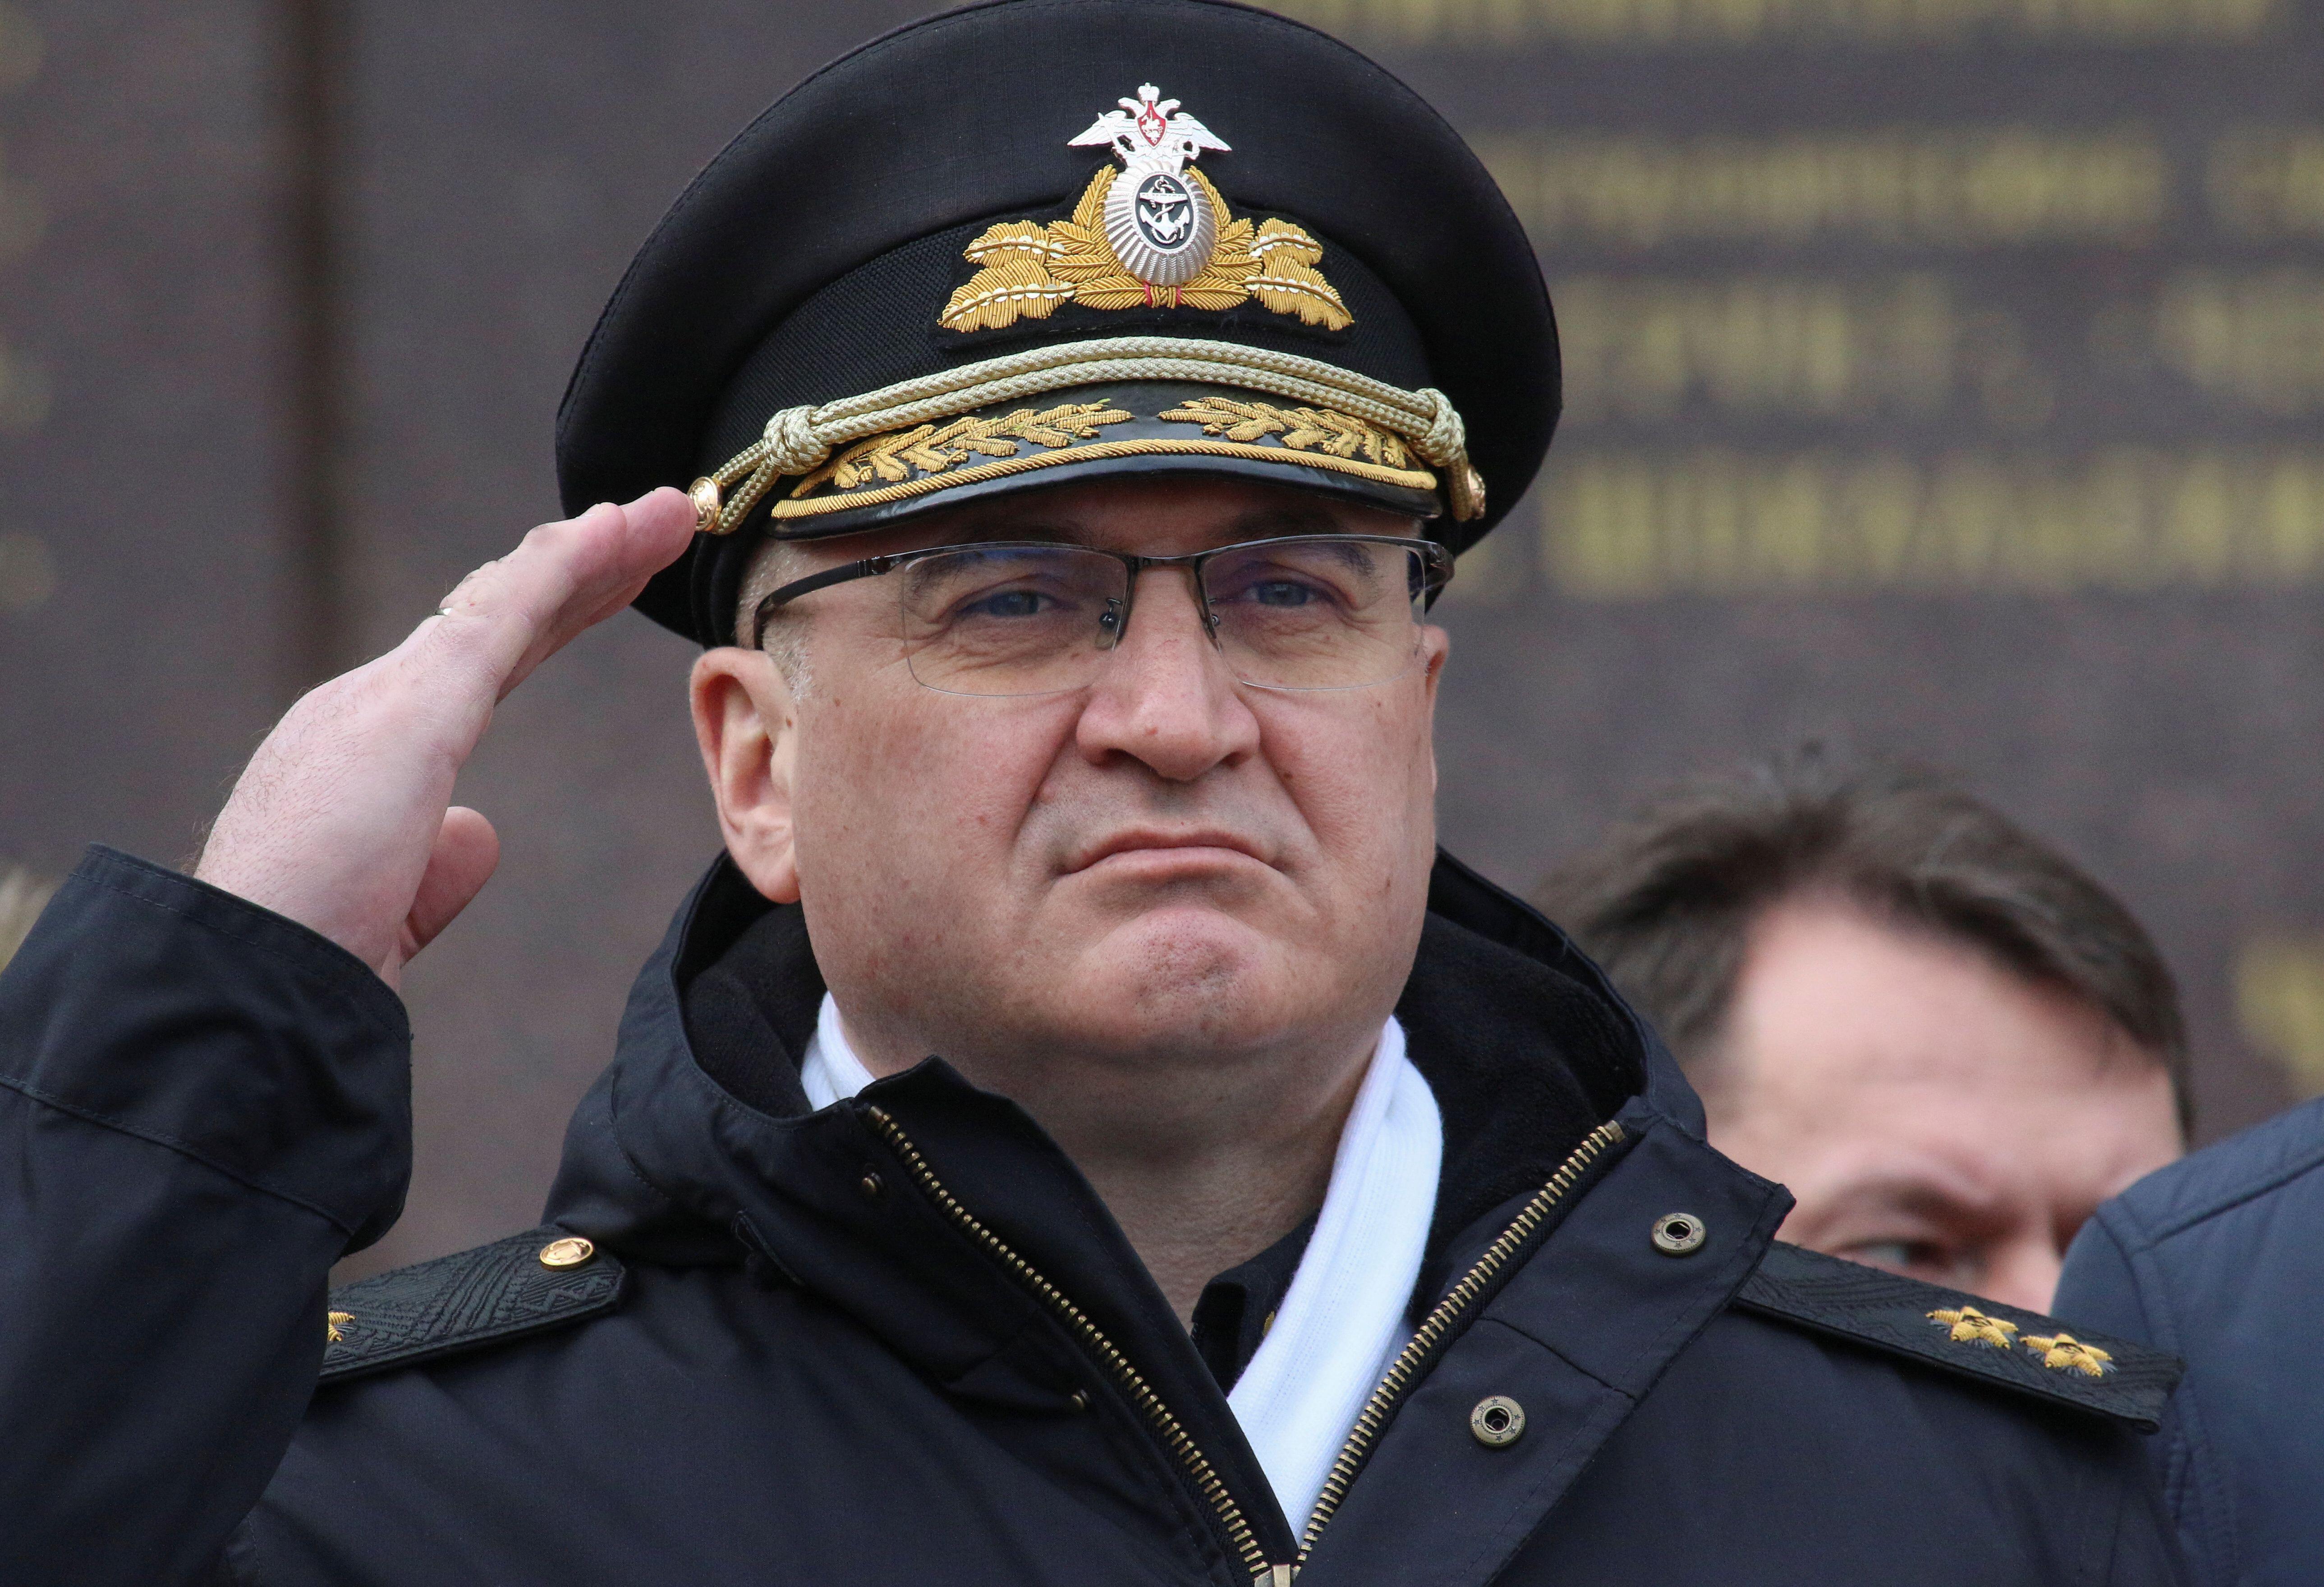 Igor Osipov became admiral of the Black Sea Fleet in May 2019